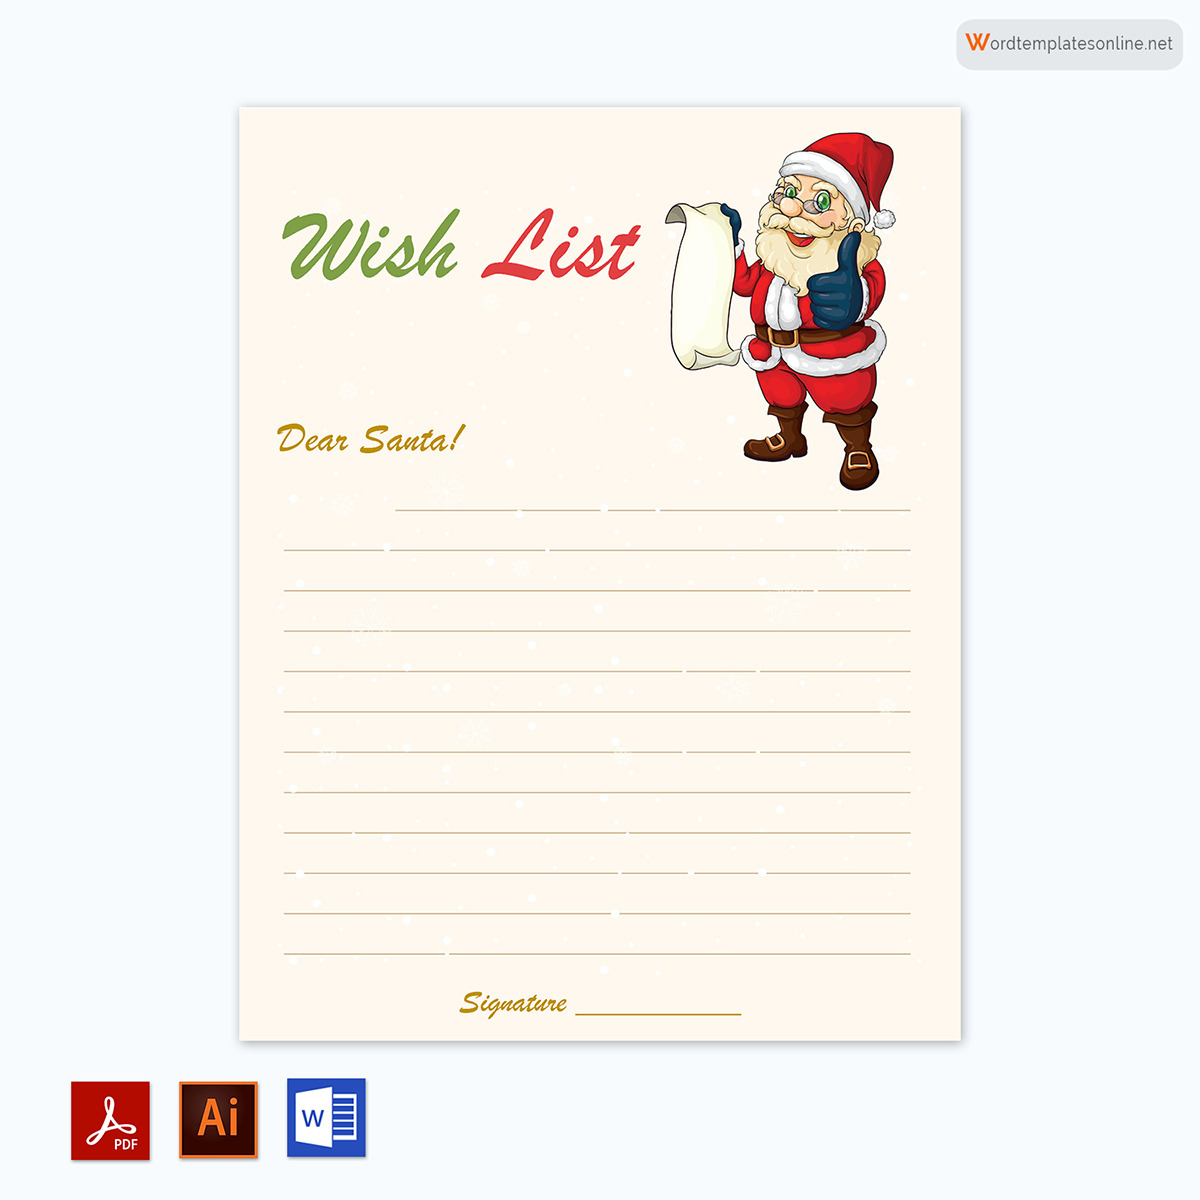  christmas wish list online 02